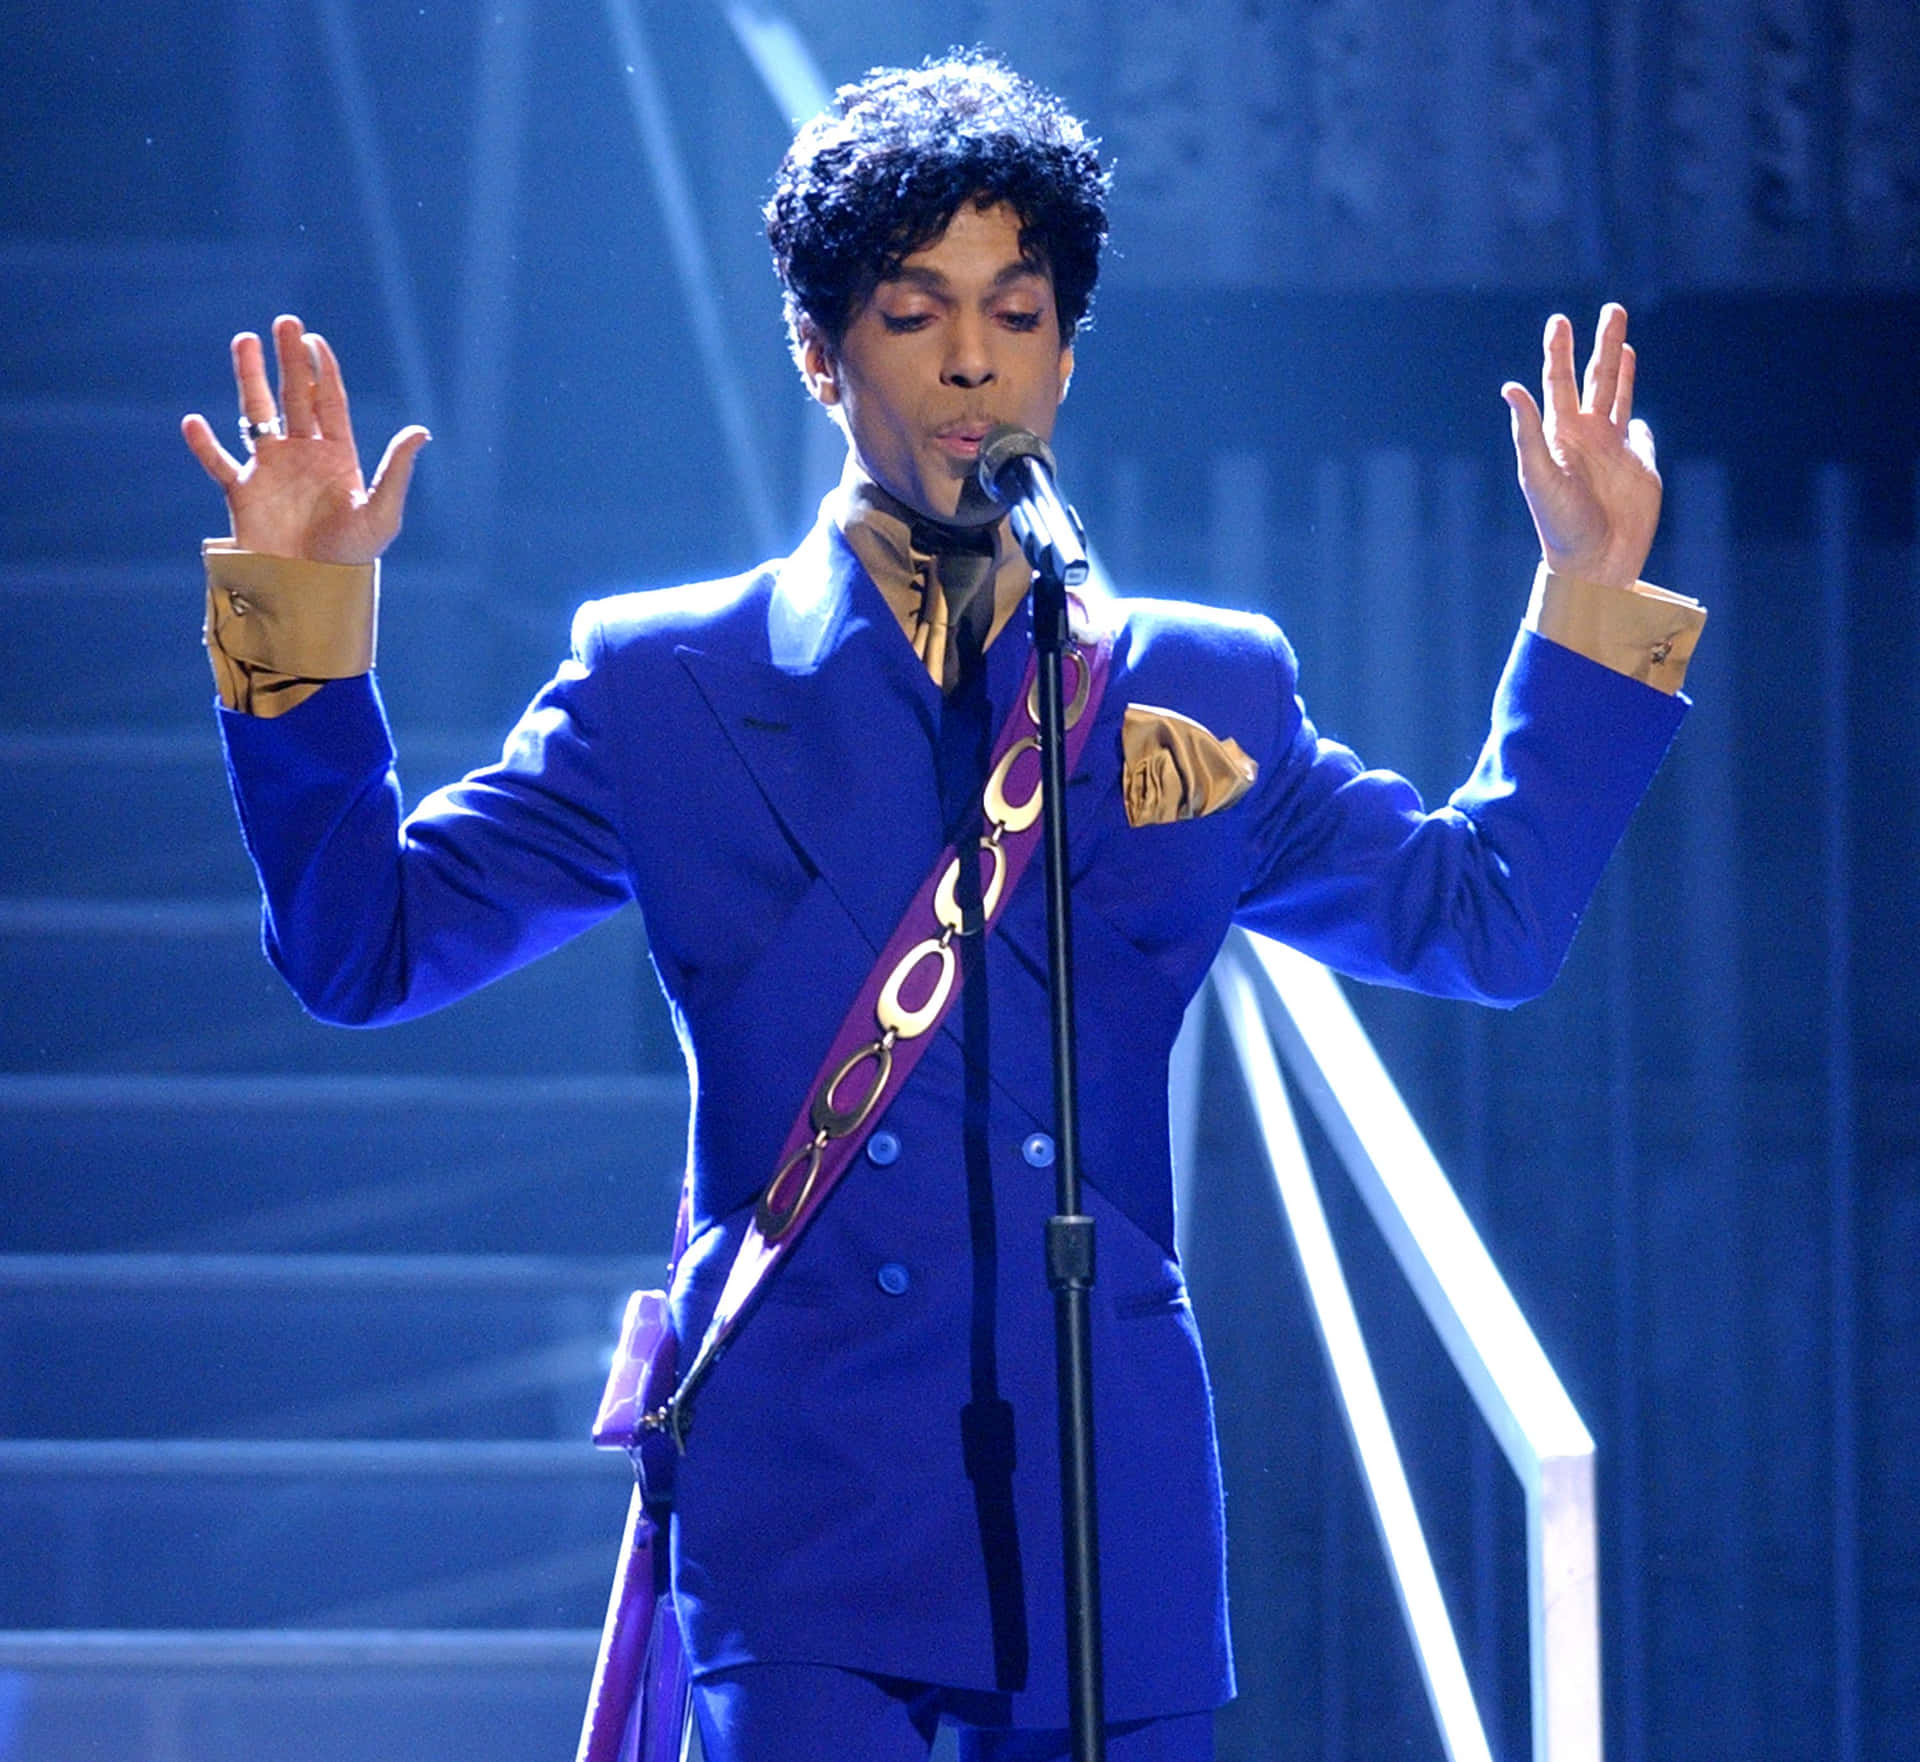 The musical genius, Prince